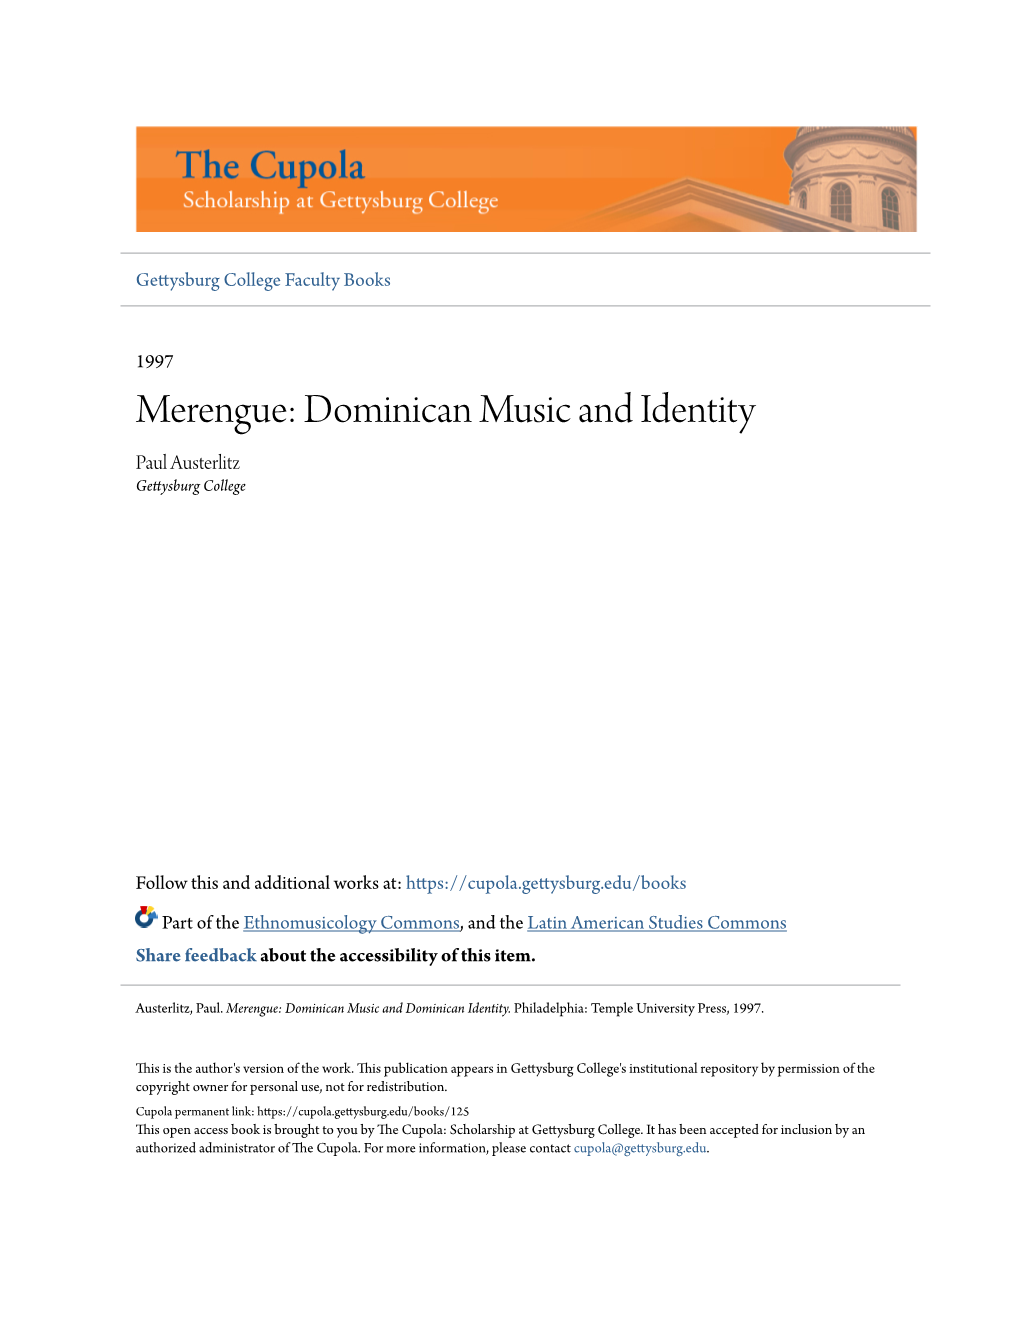 Merengue: Dominican Music and Identity Paul Austerlitz Gettysburg College